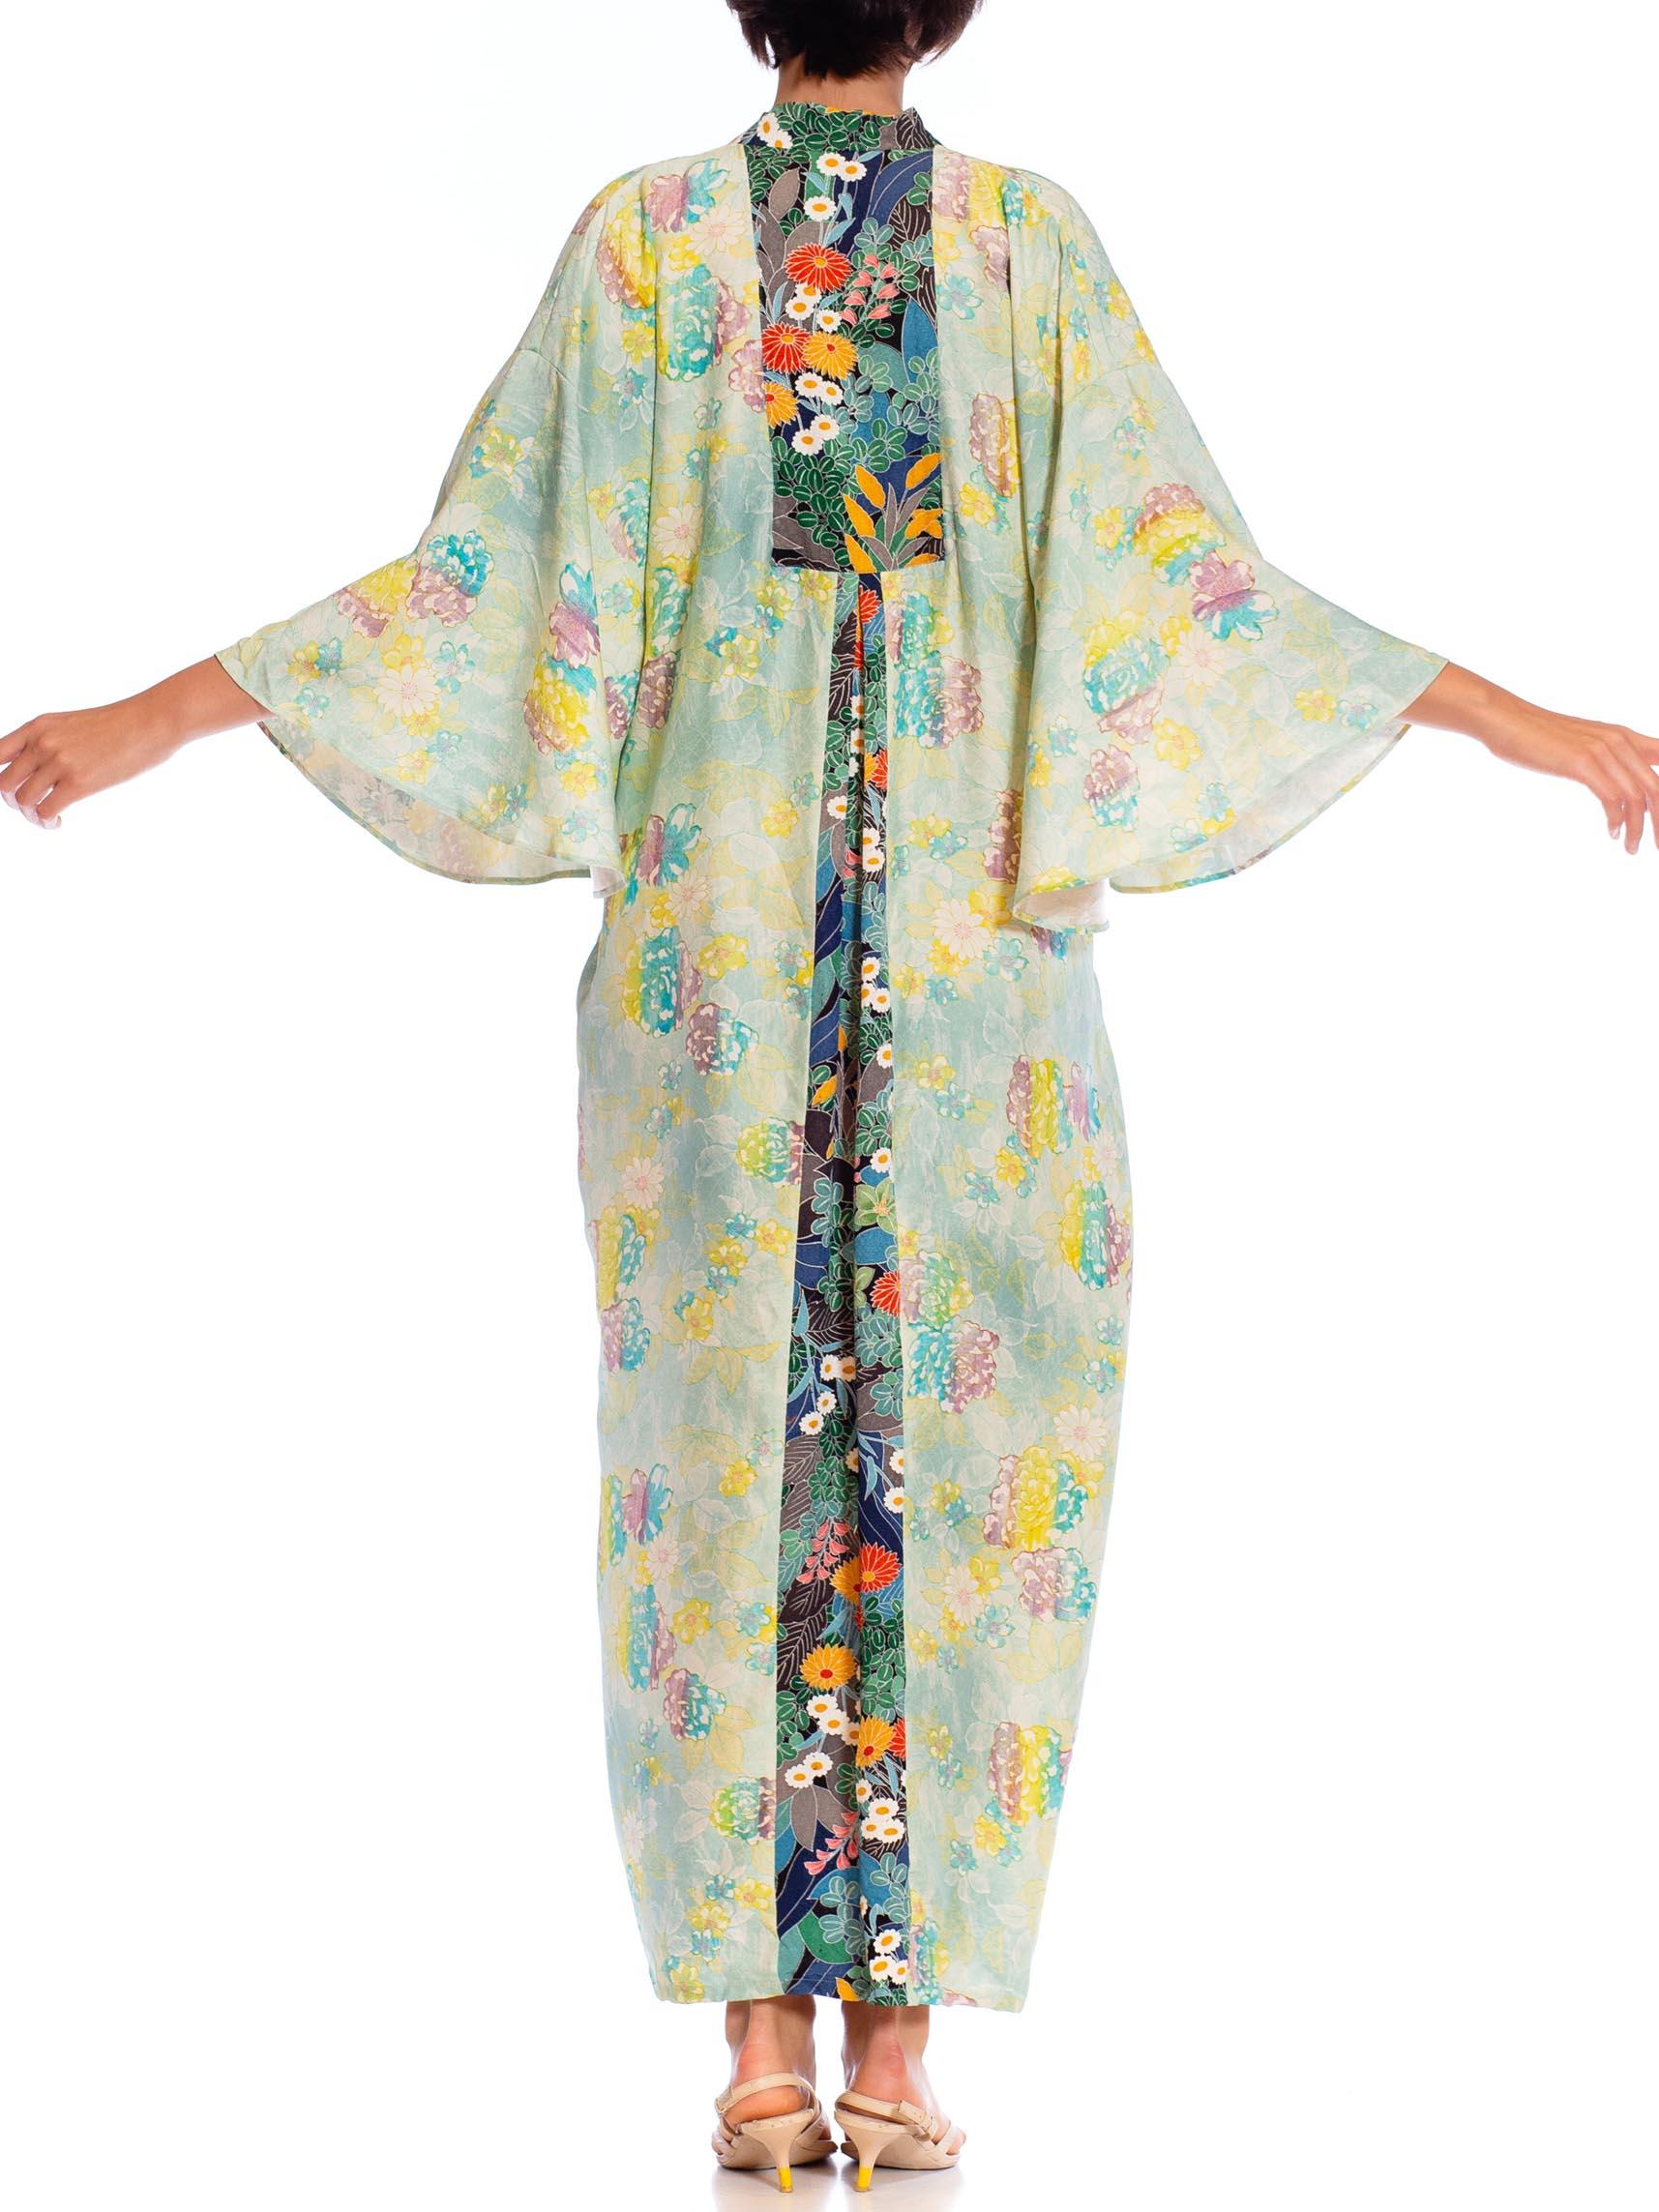 MORPHEW COLLECTION Teal Japanese Kimono Silk Floral Pattern Kaftan Dark Blue An For Sale 4